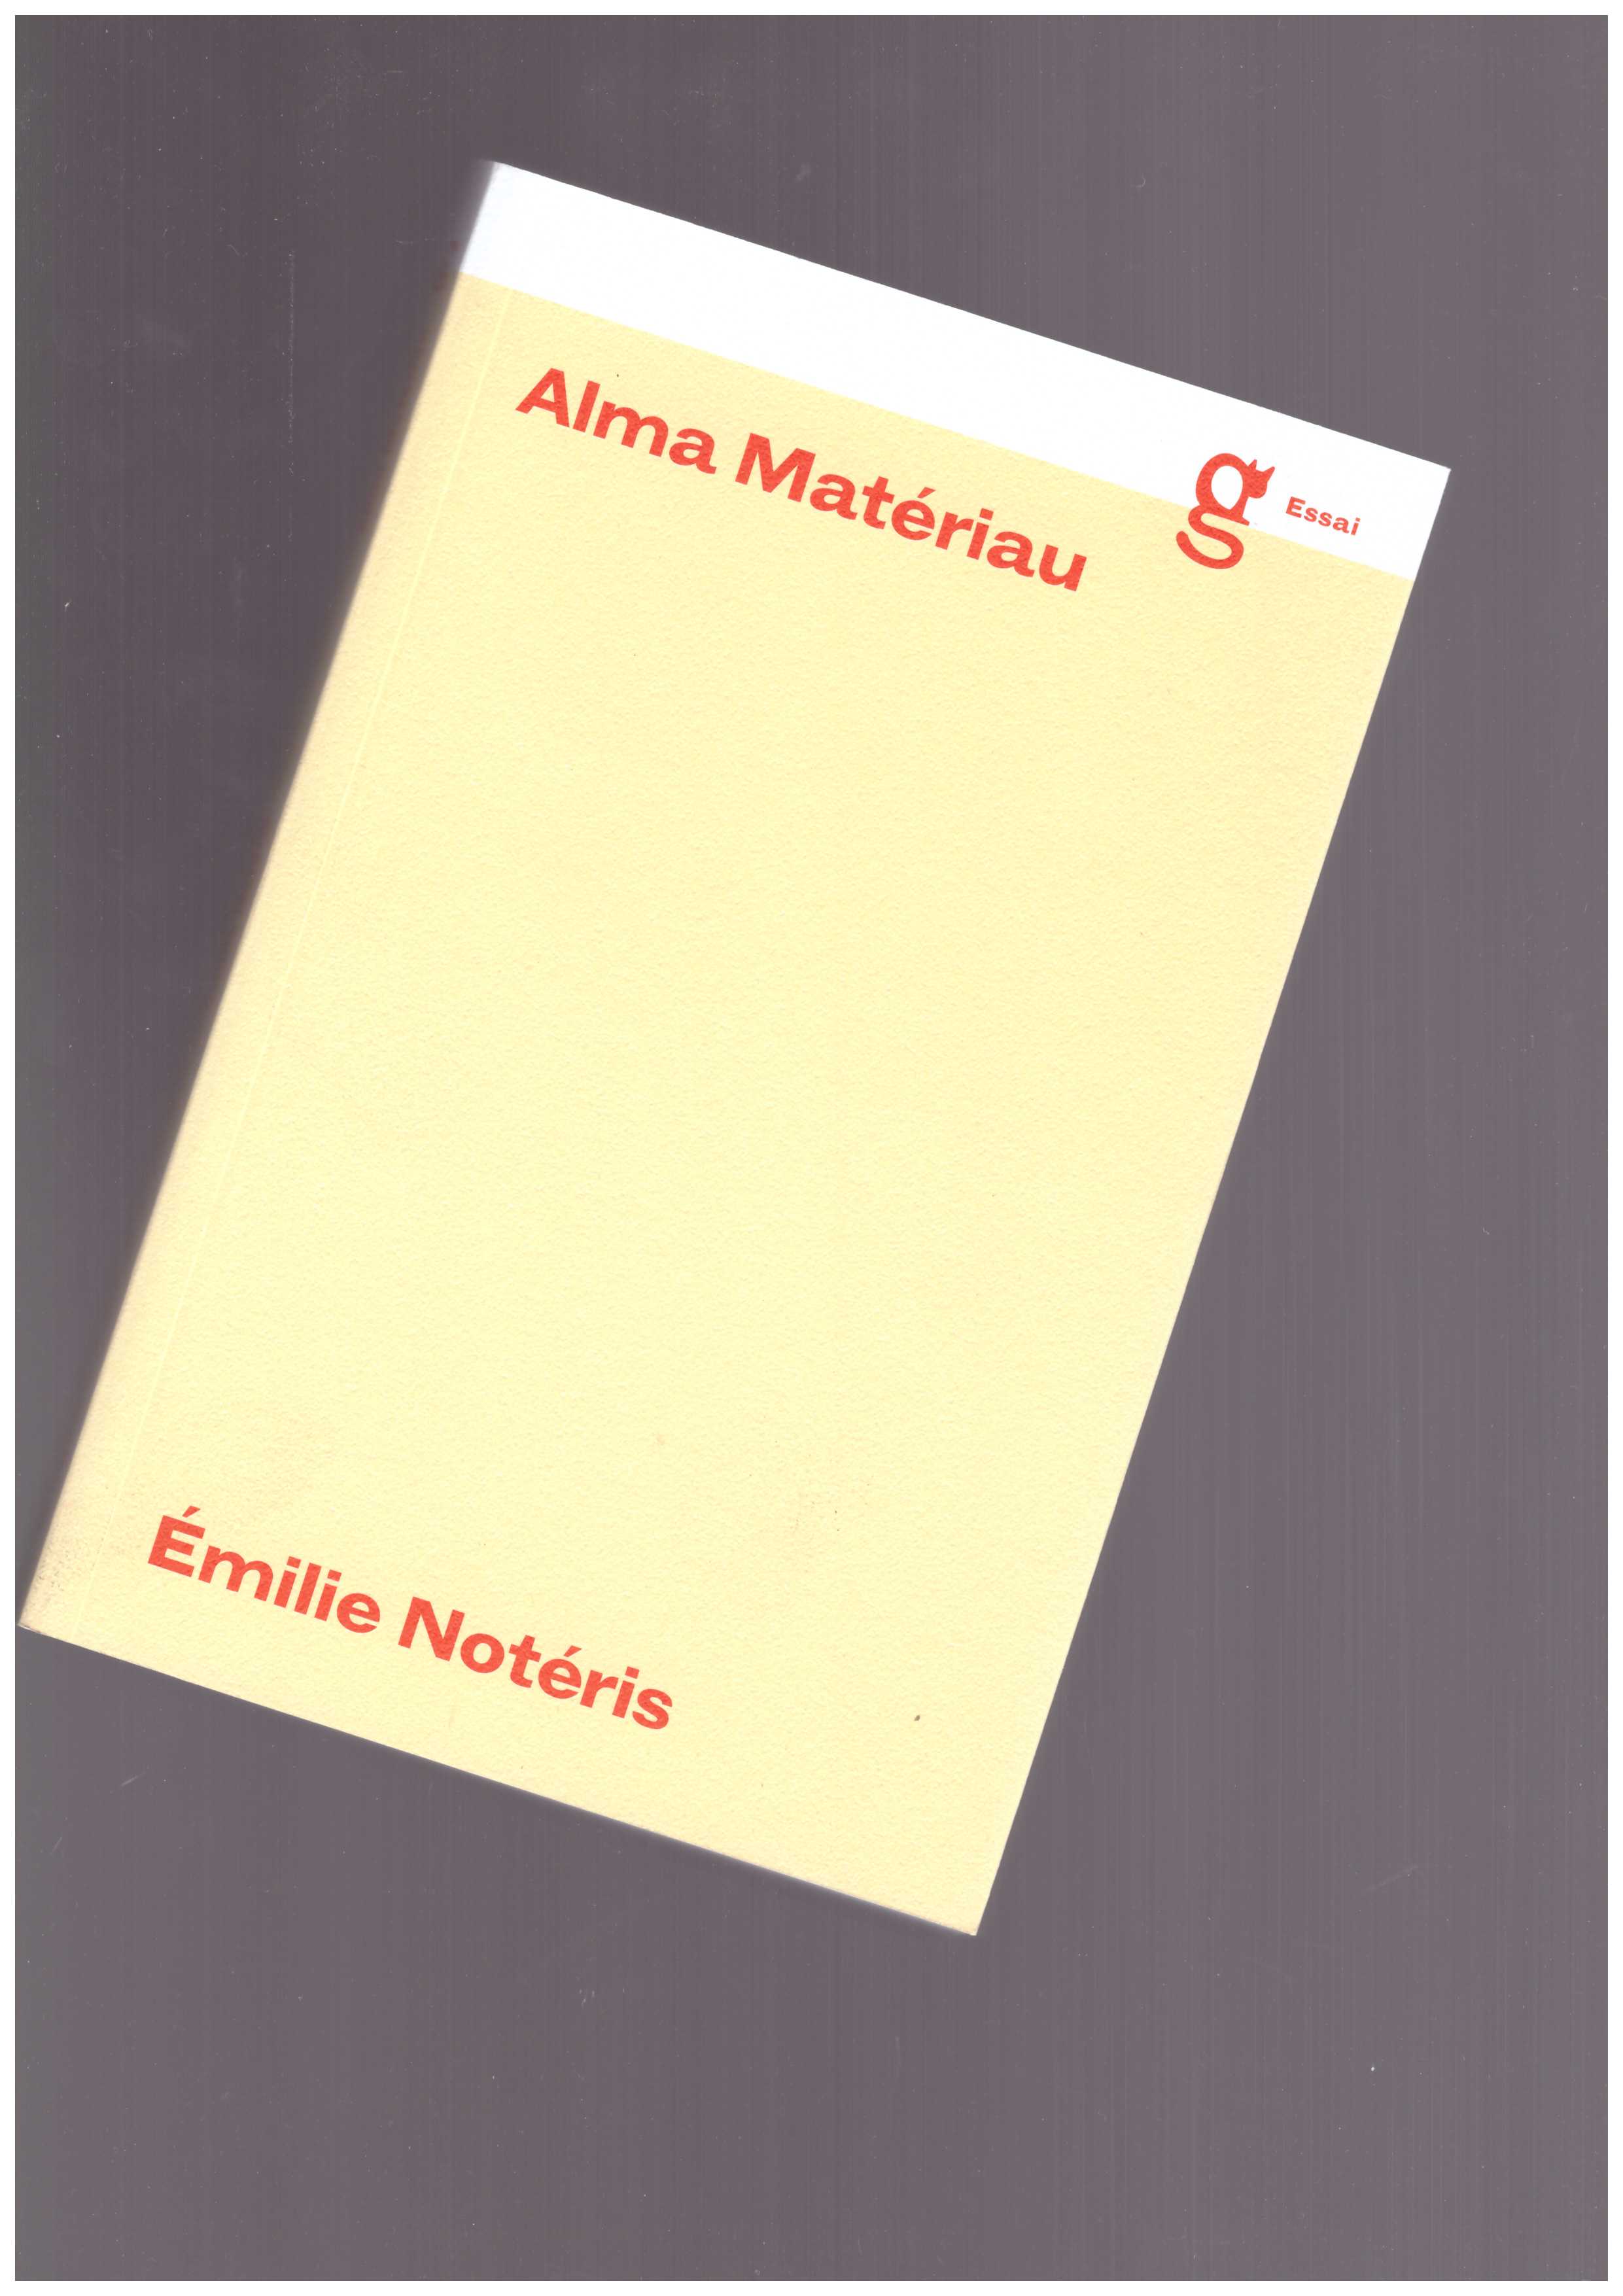 NOTERIS, Emilie - Alma Matériau